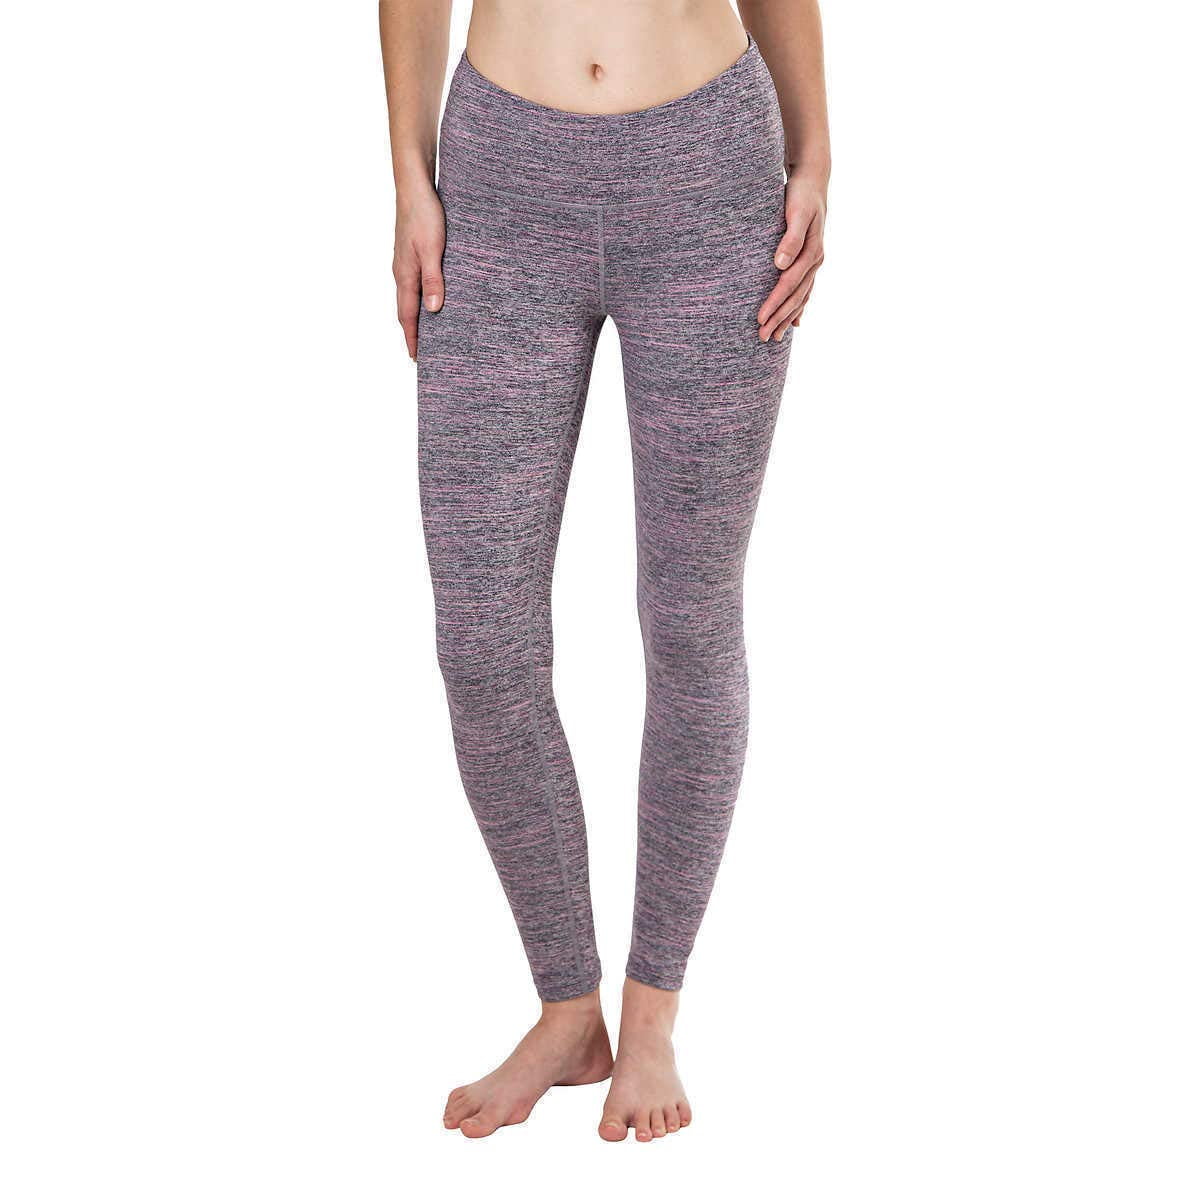 Tuff Athletics Women’s Dark Grey Capri Pants / Size Medium